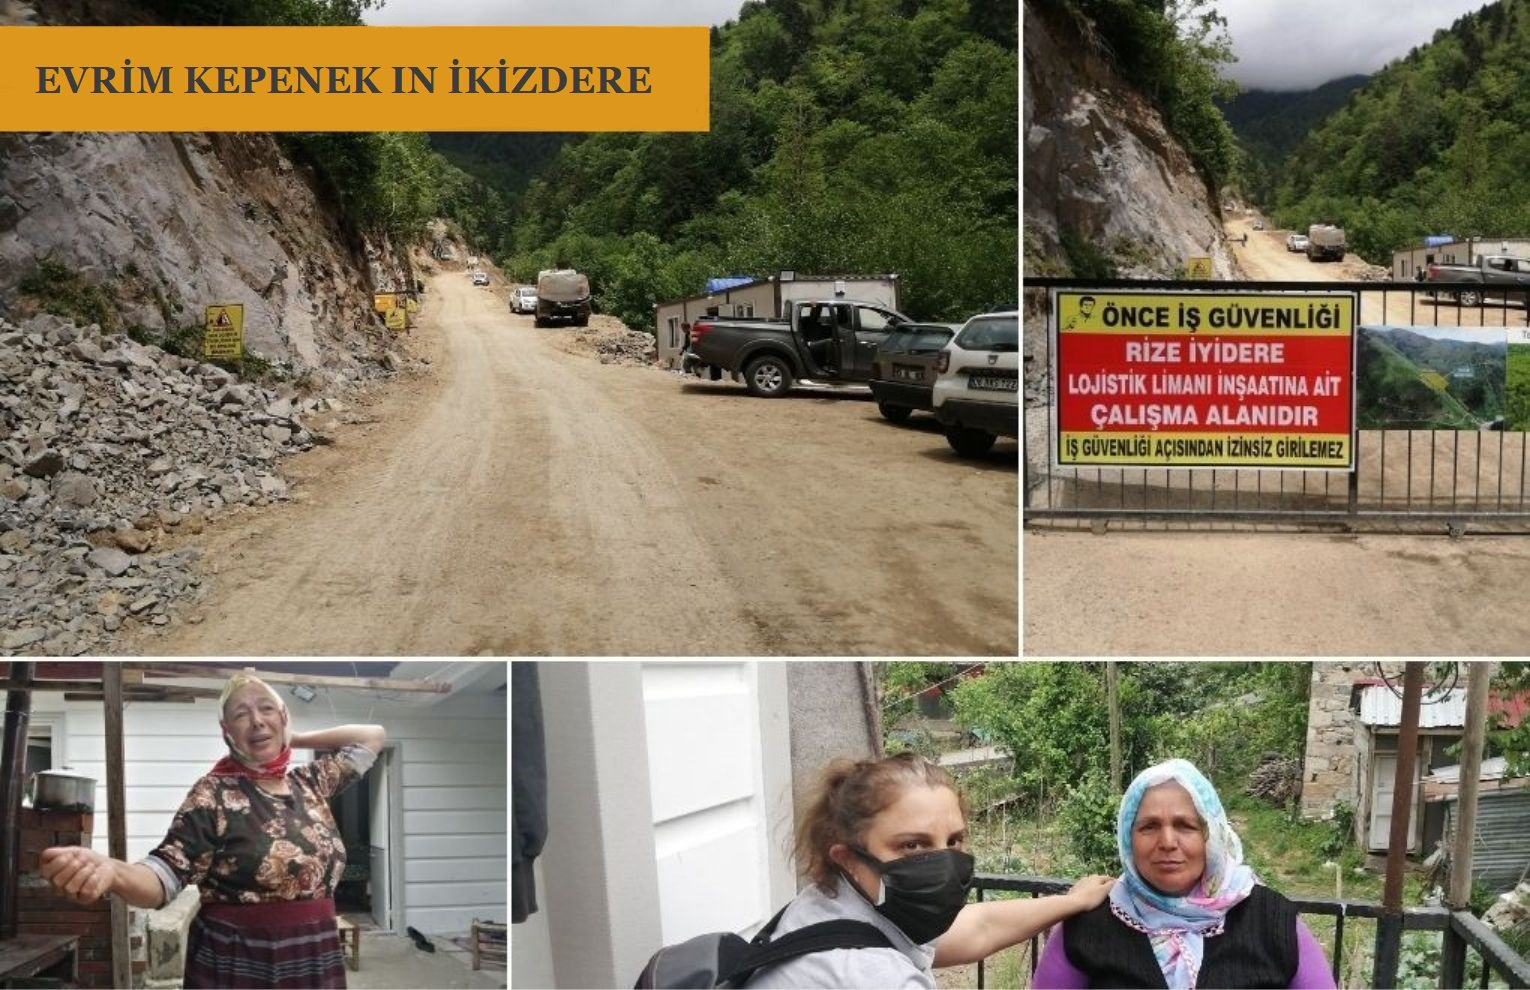 Women resisting in İkizdere: Cengiz, take your dozer and go!